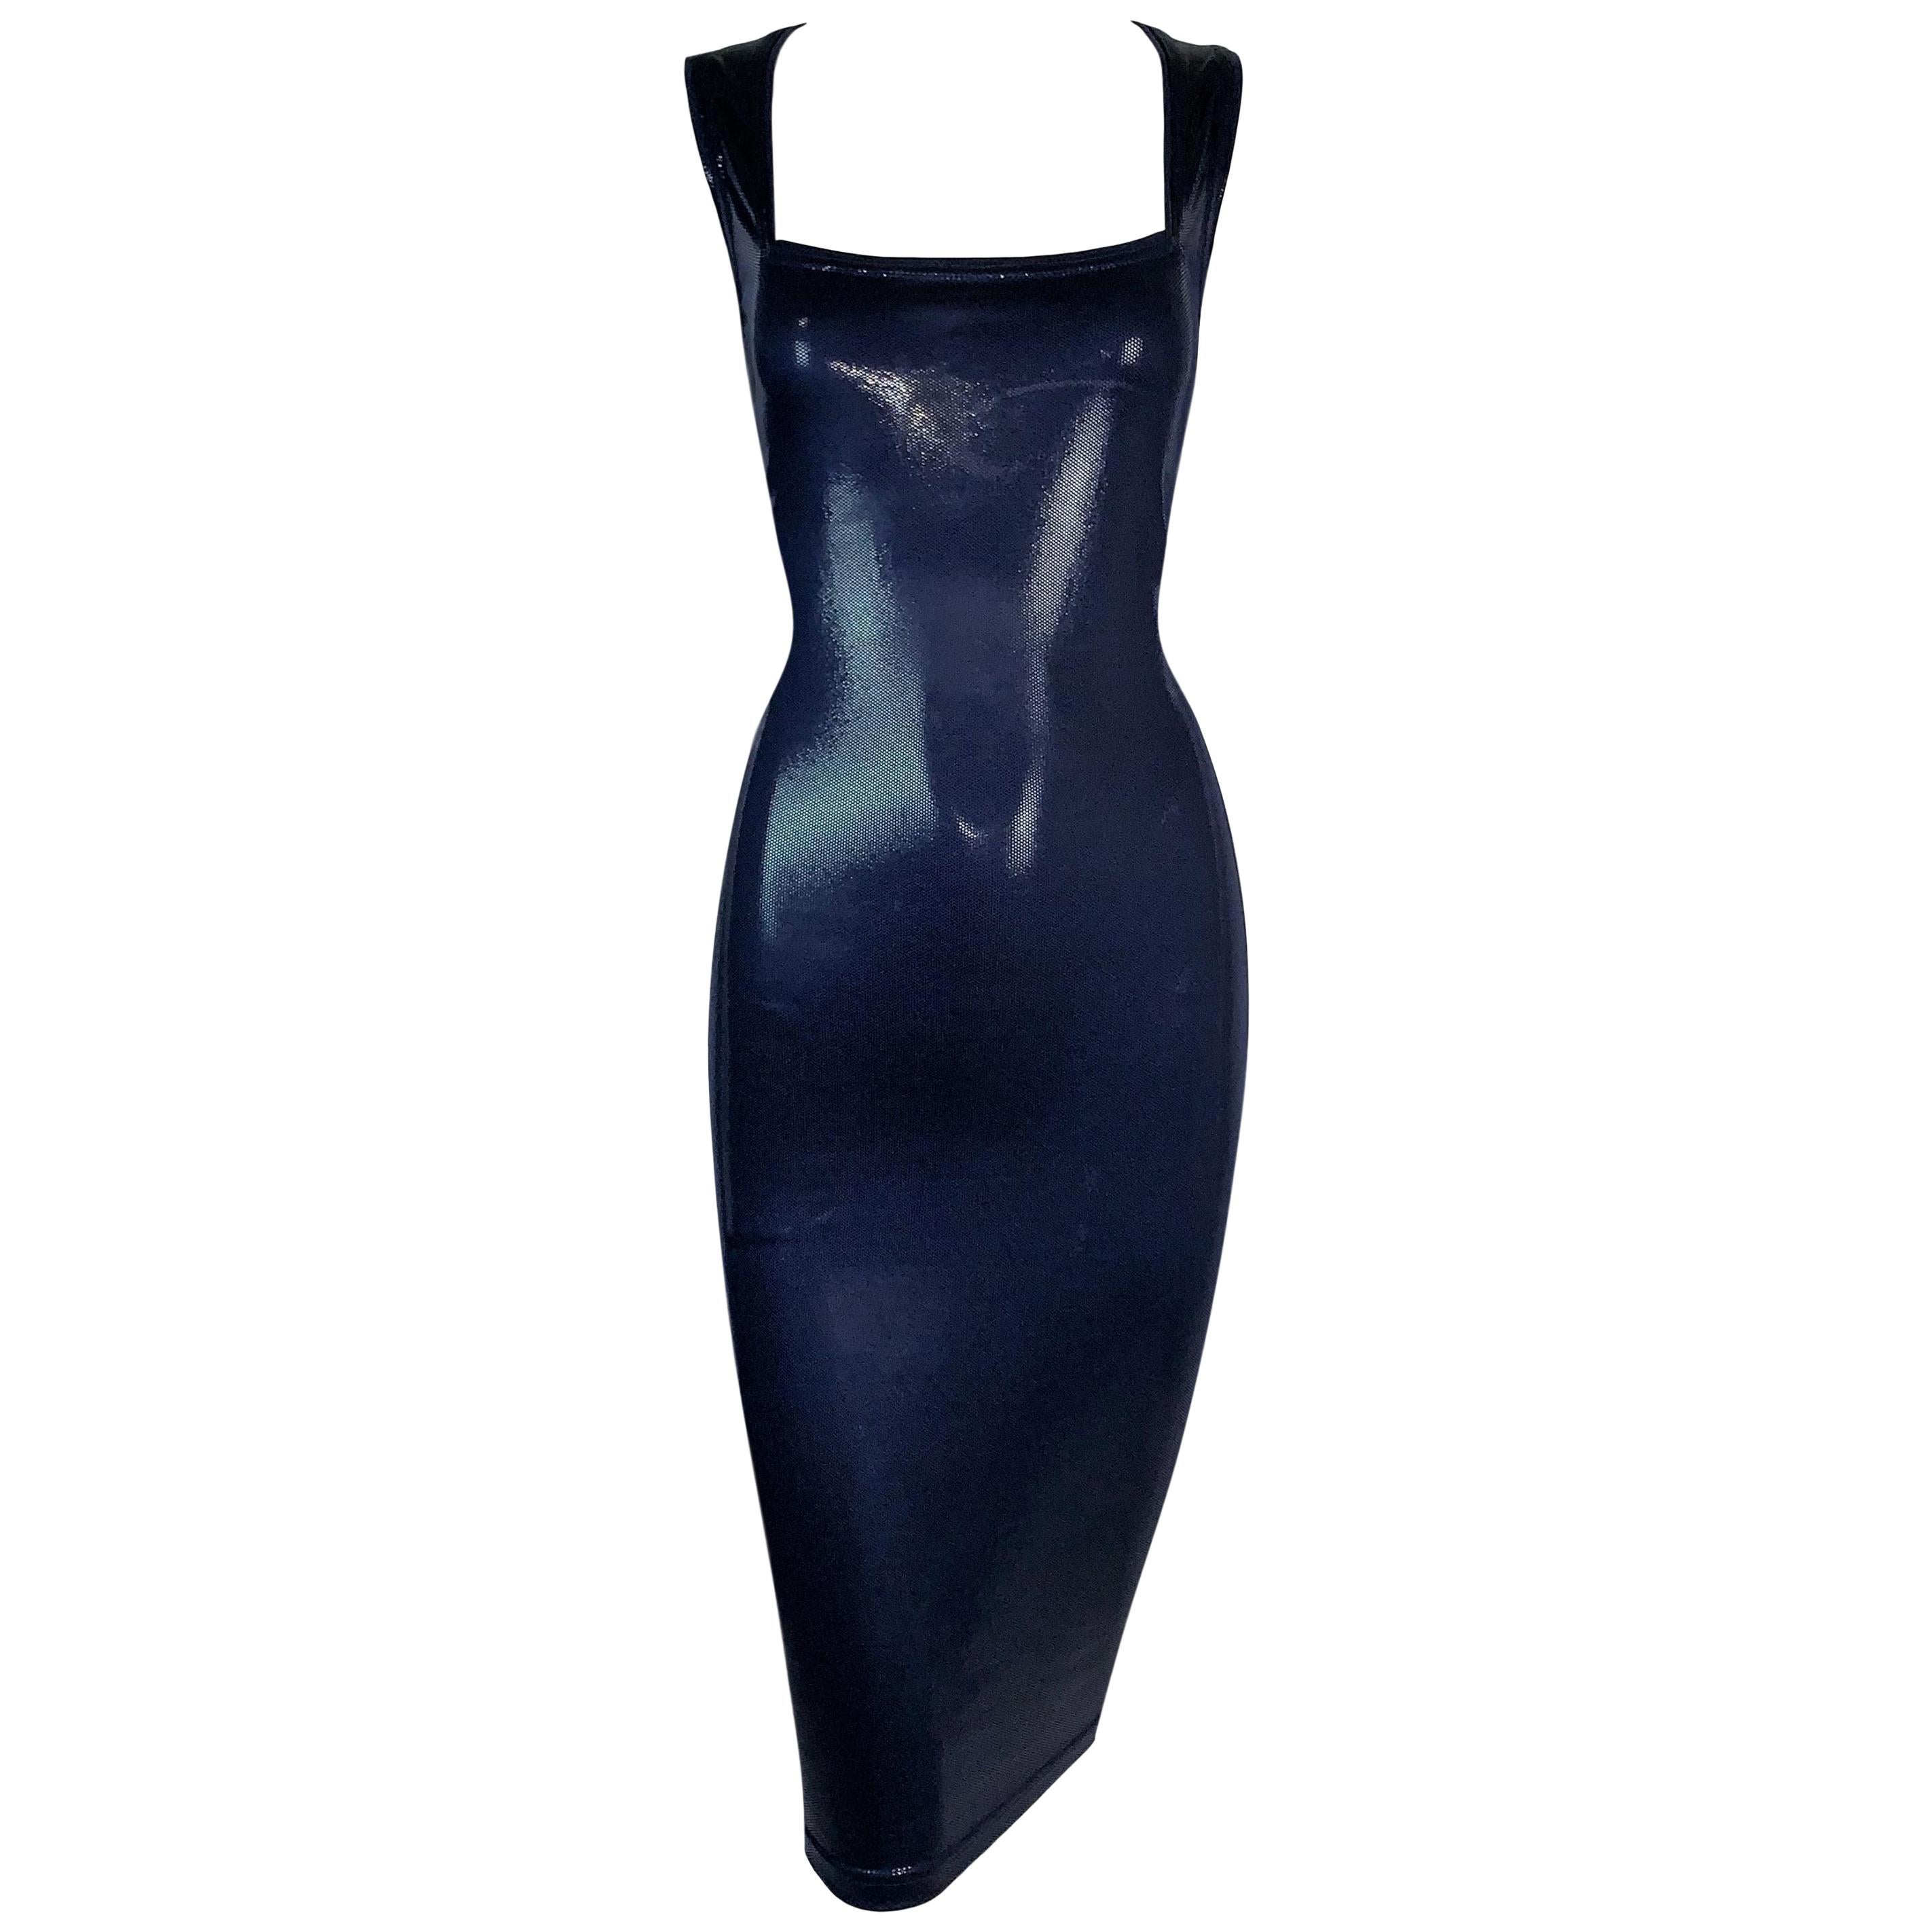 1994 Gianni Versace Latex Wet Look Navy Blue Bodycon Dominatrix Dress